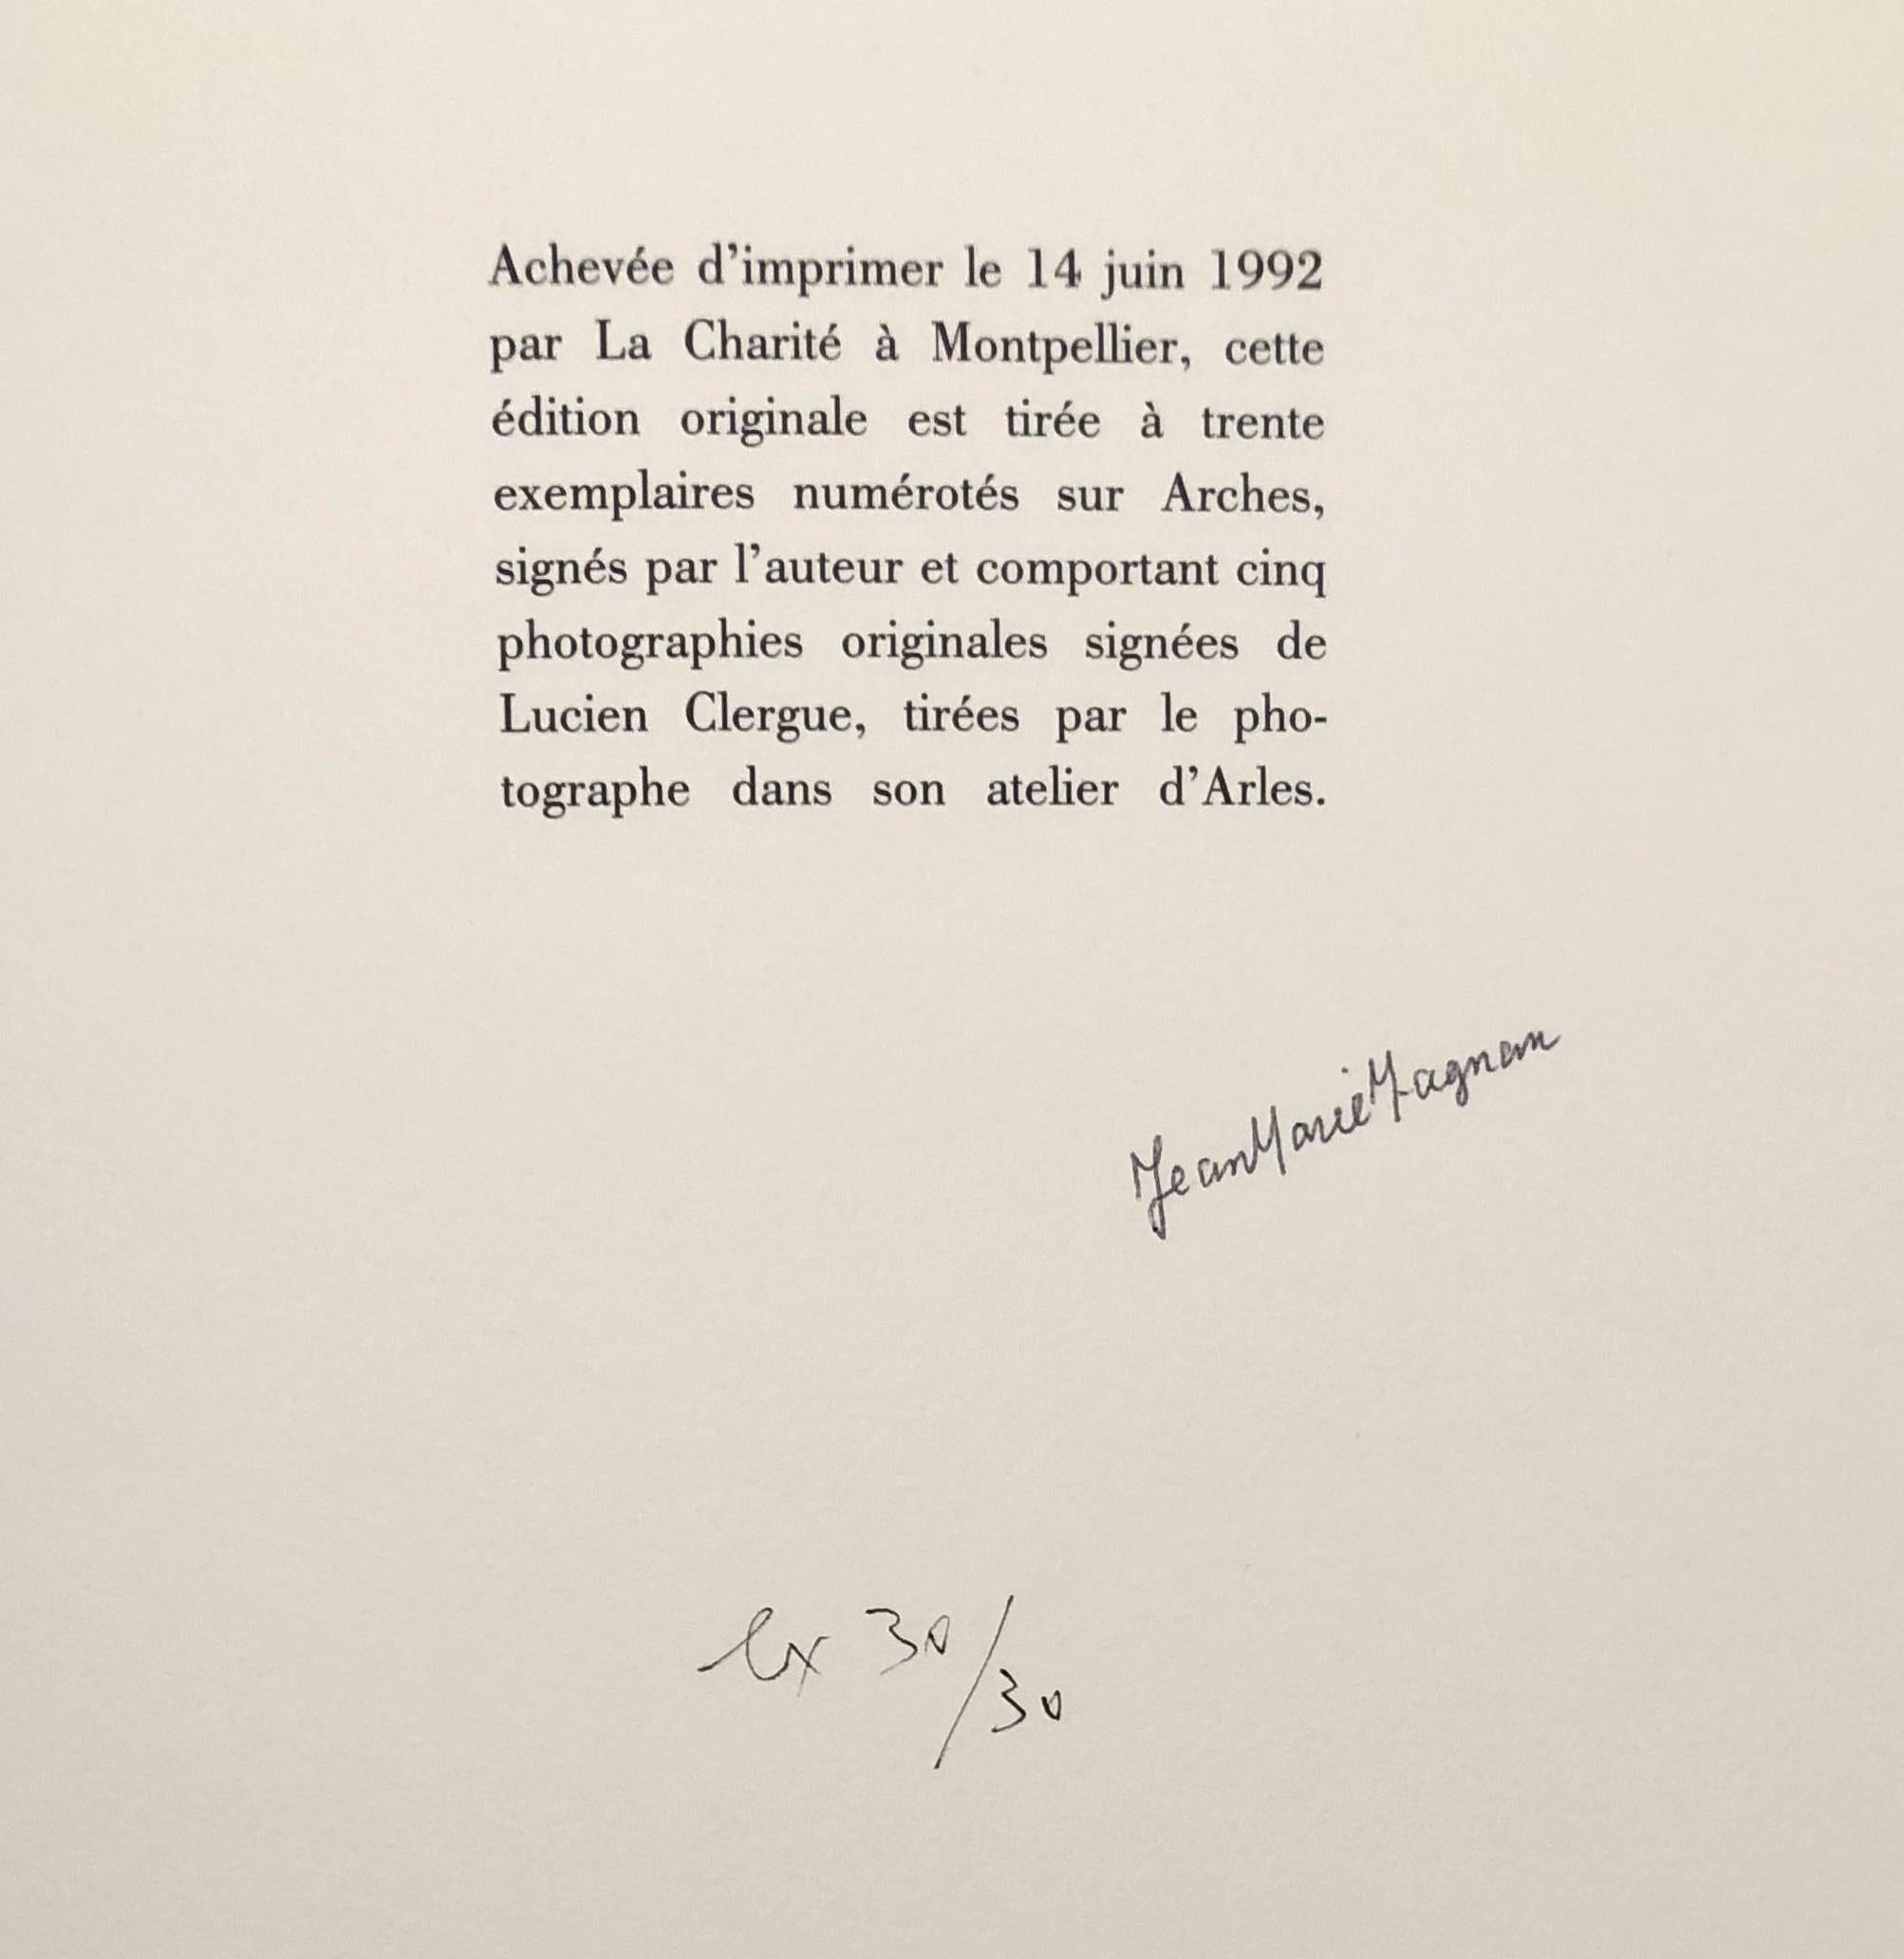 5 Photographies (Picasso's portraits) by Lucien Clergue - 30 copies For Sale 5